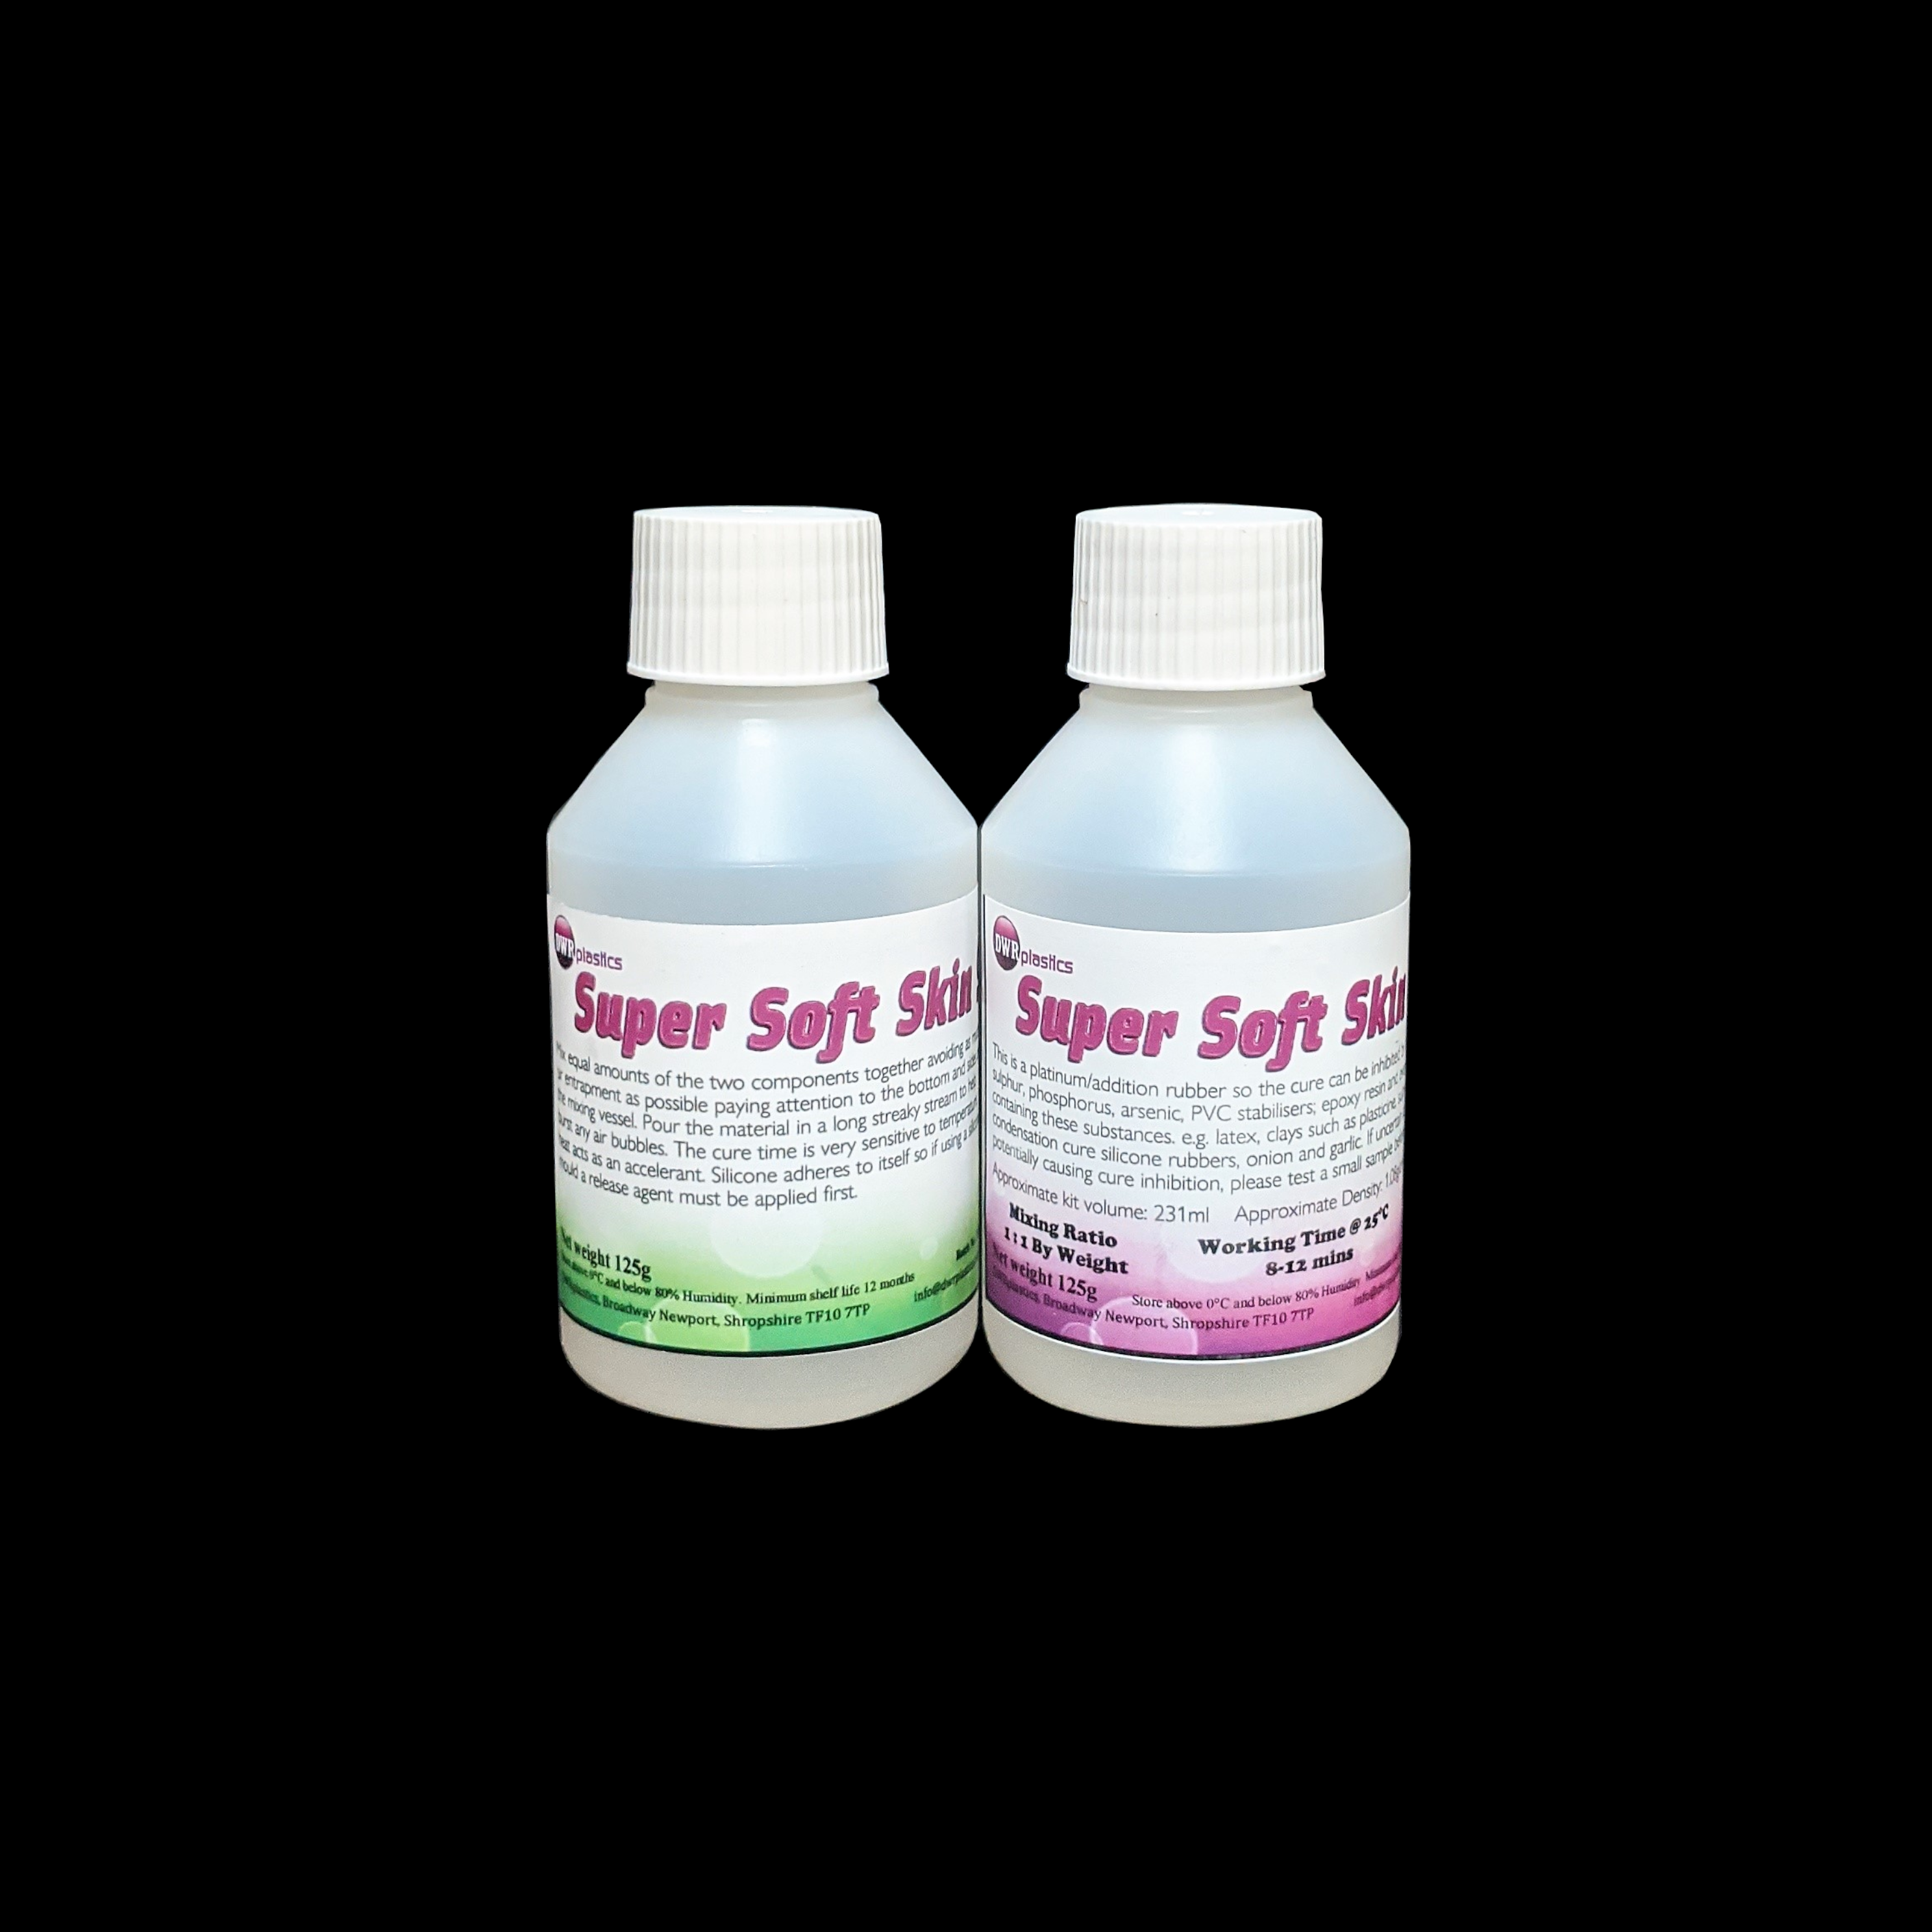 Super Soft Skin Safe Silicone Rubber 250g kit - DWR plastics